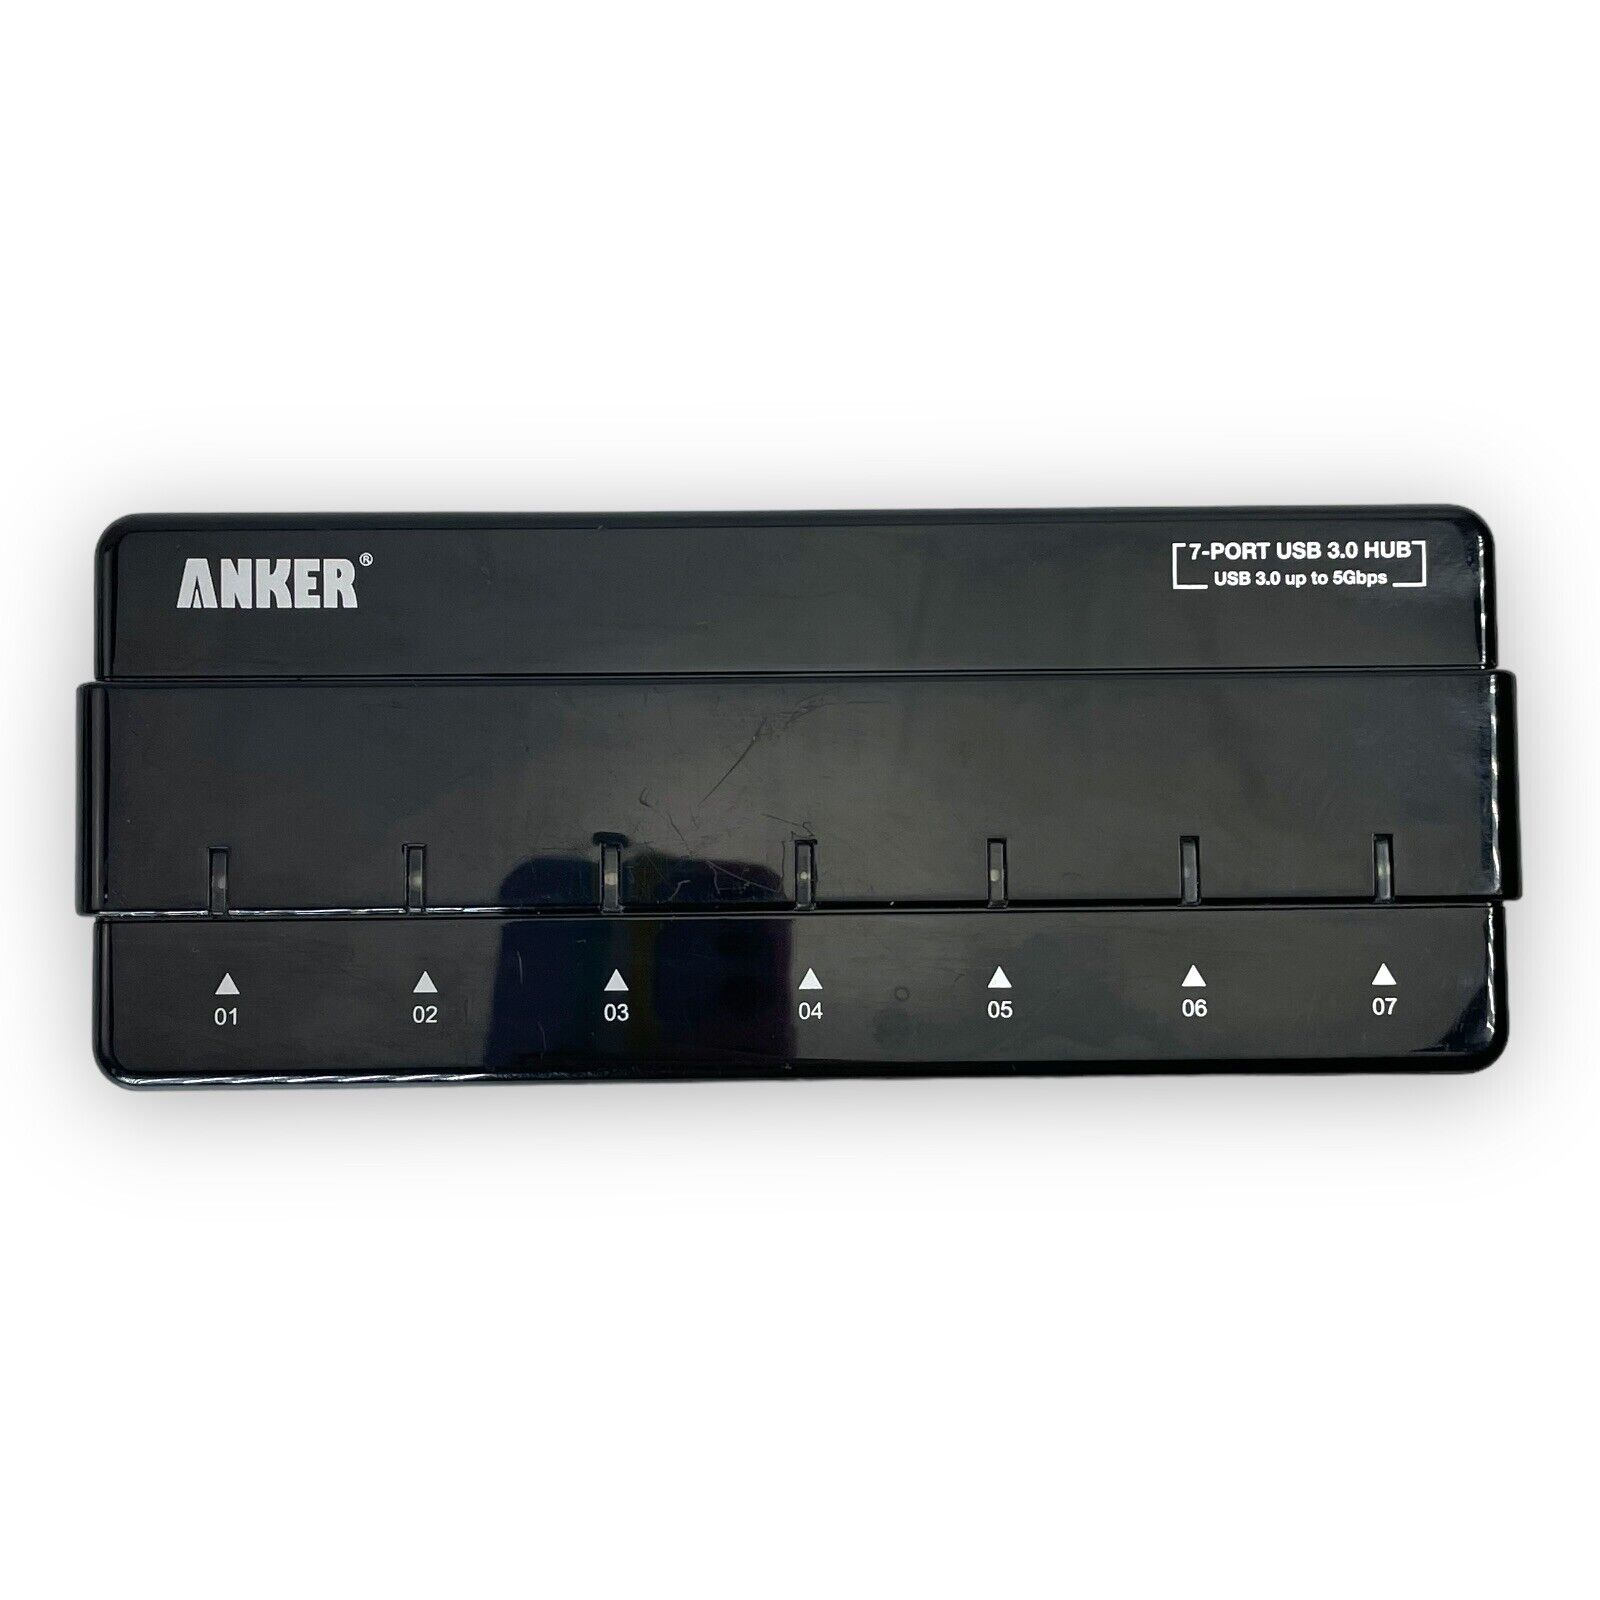 Anker 7-Port USB 3.0 Desktop HUB H7928-U3 No Power Adapter